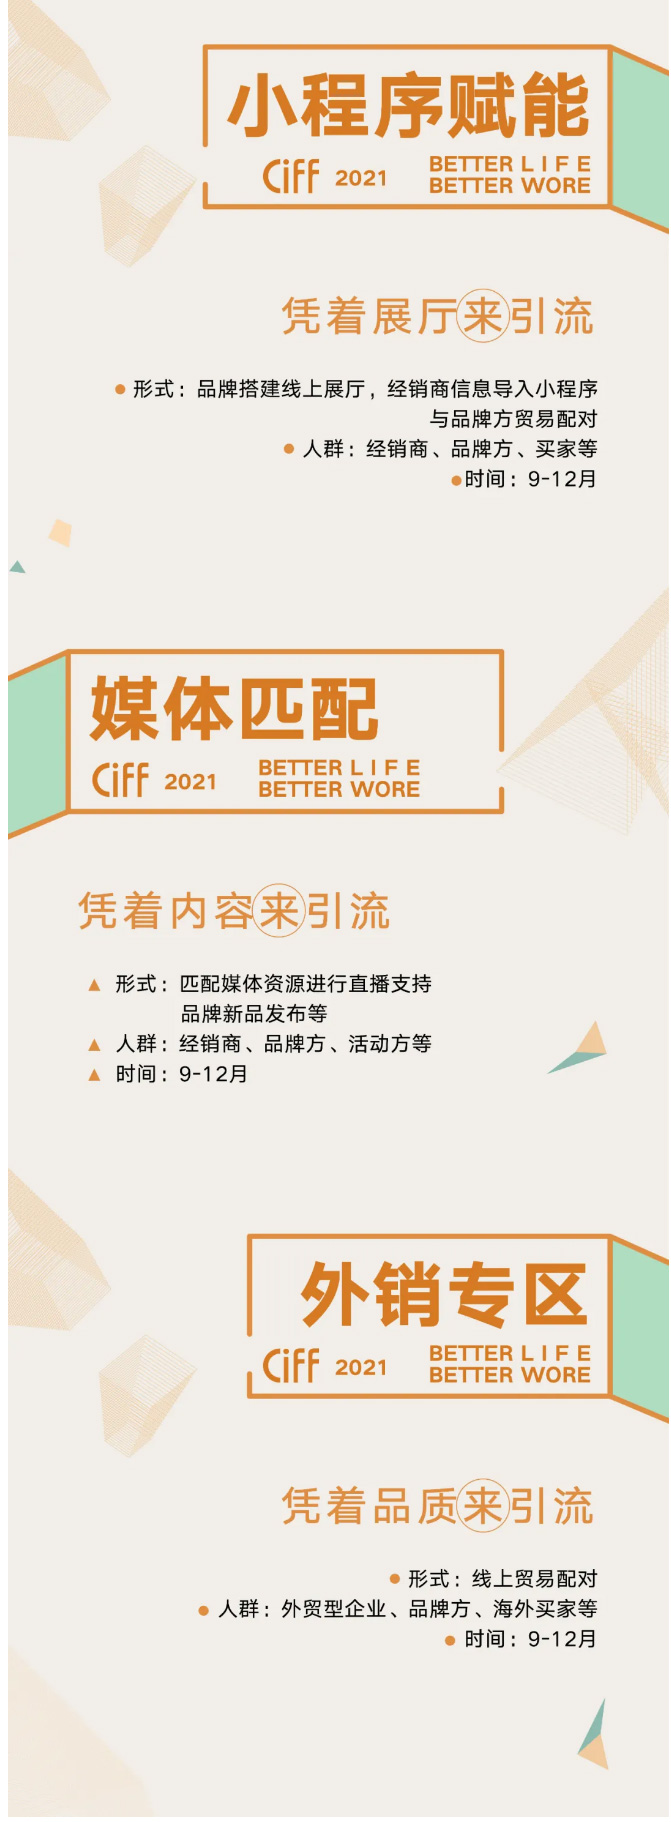 CIFF上海虹桥--增值服务行动方案_04.jpg